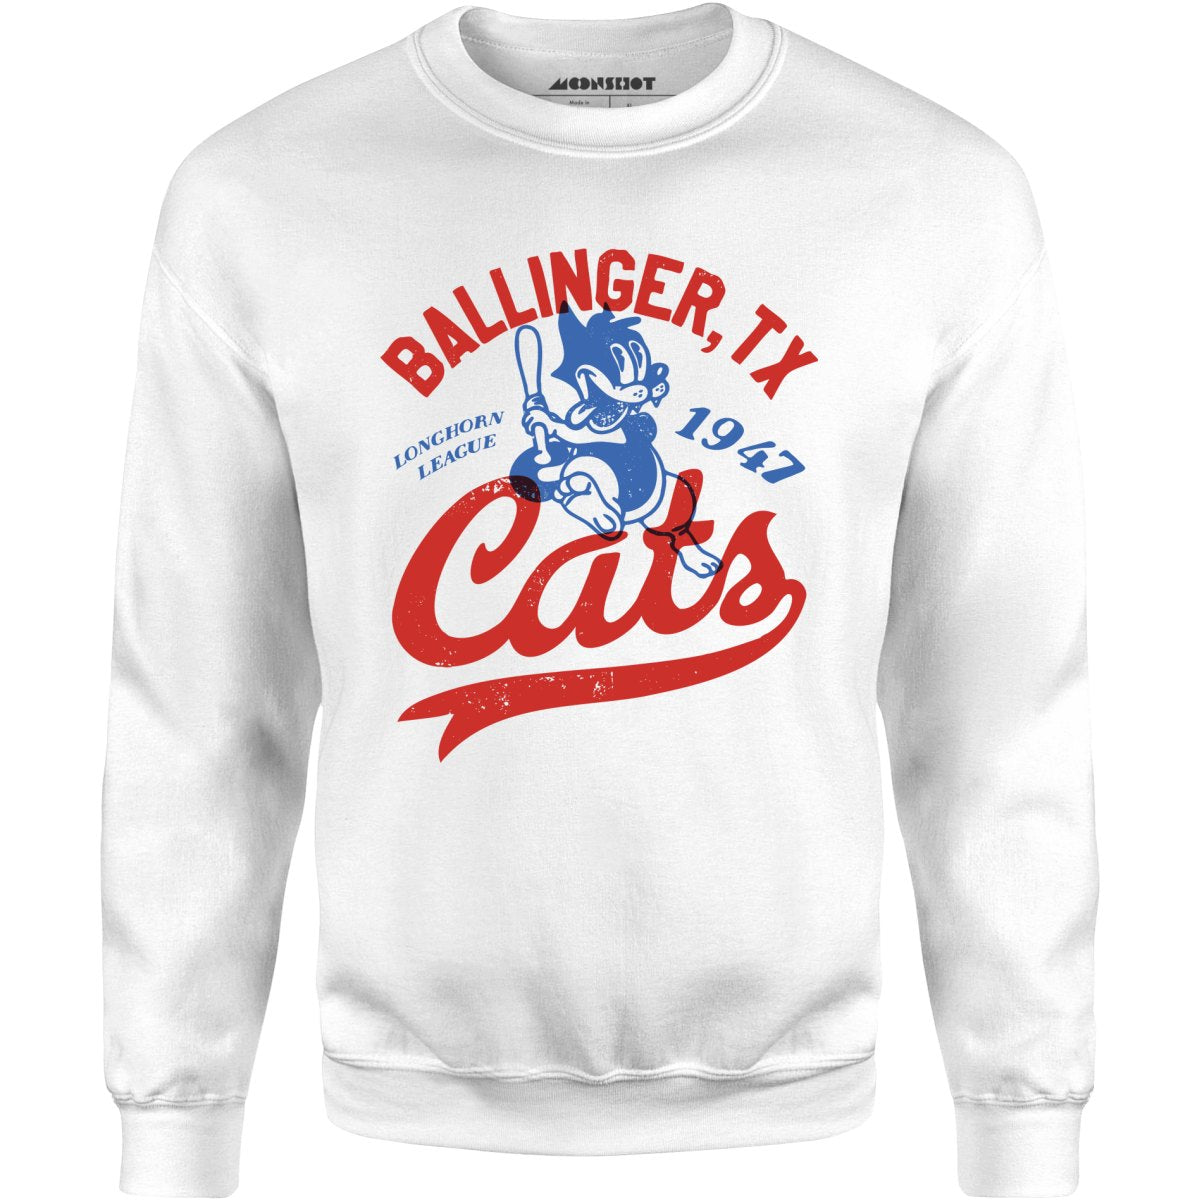 Ballinger Cats - Texas - Vintage Defunct Baseball Teams - Unisex Sweatshirt